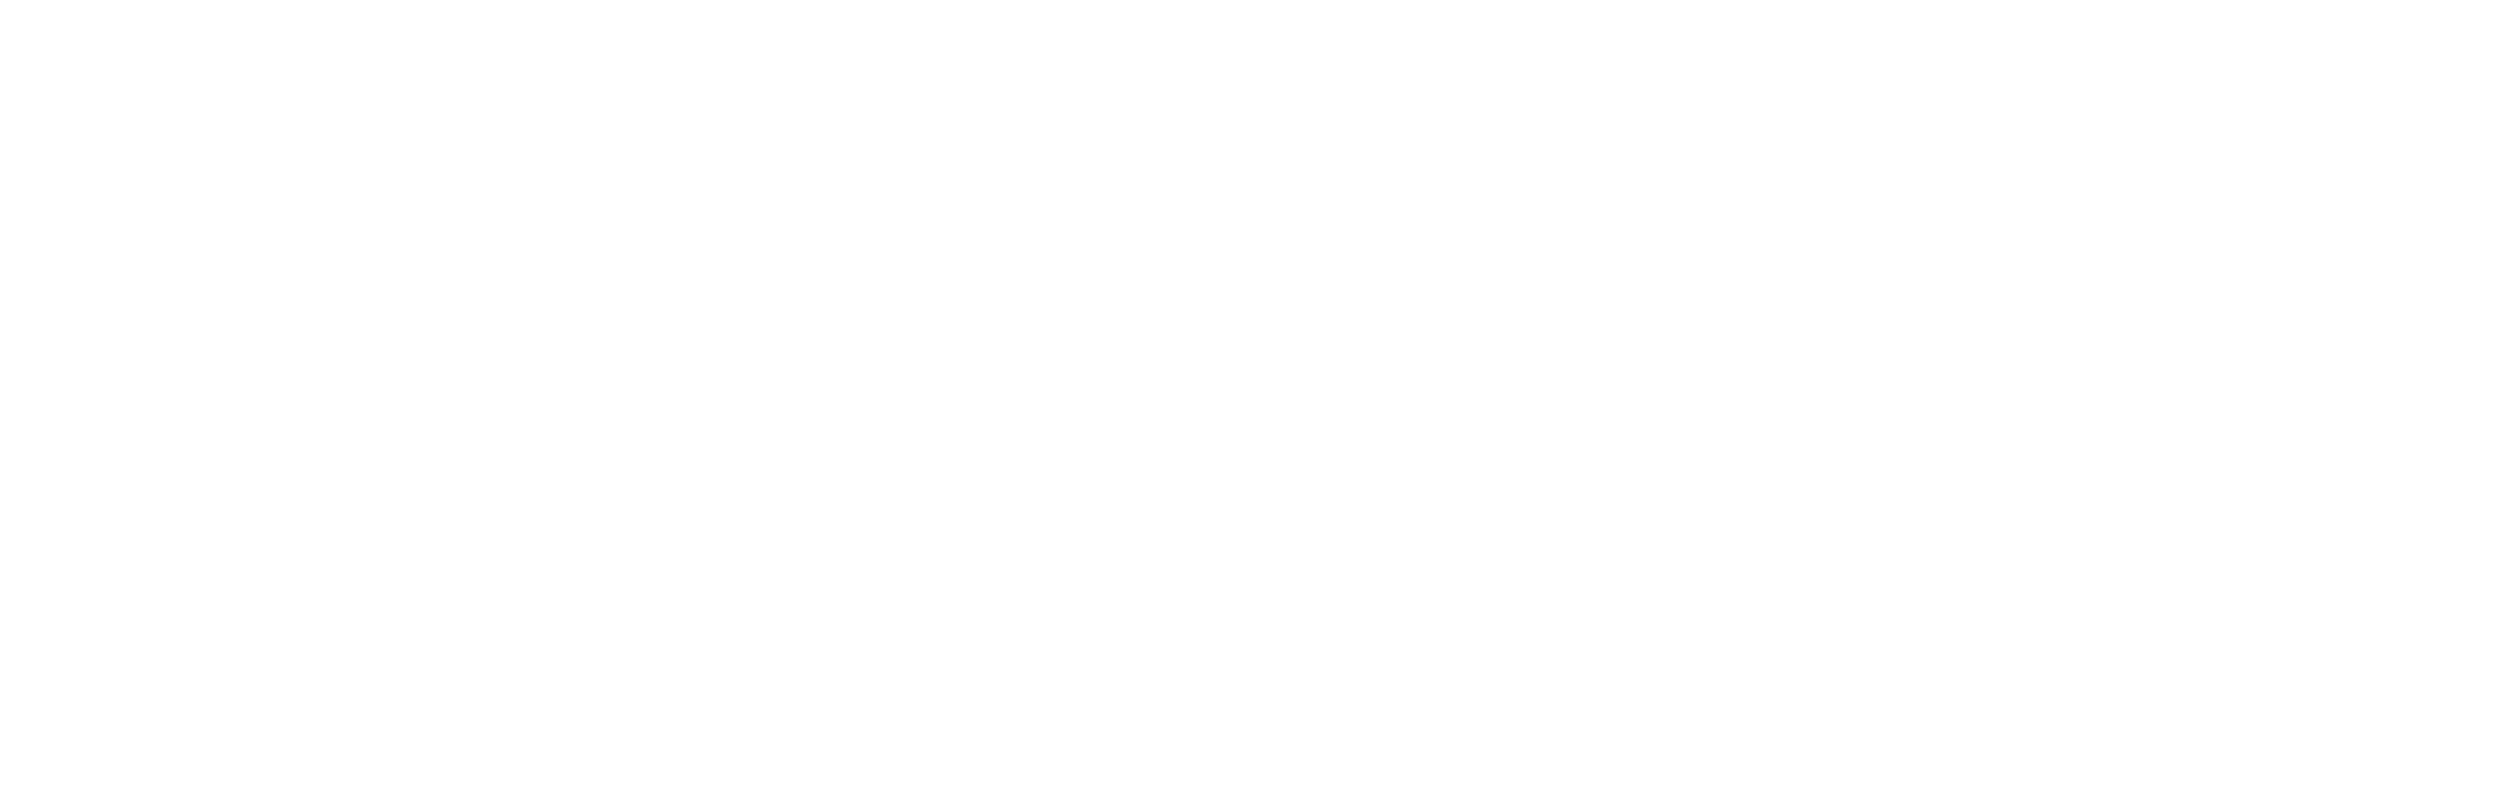 gemeente-Den-Haag-logo_0